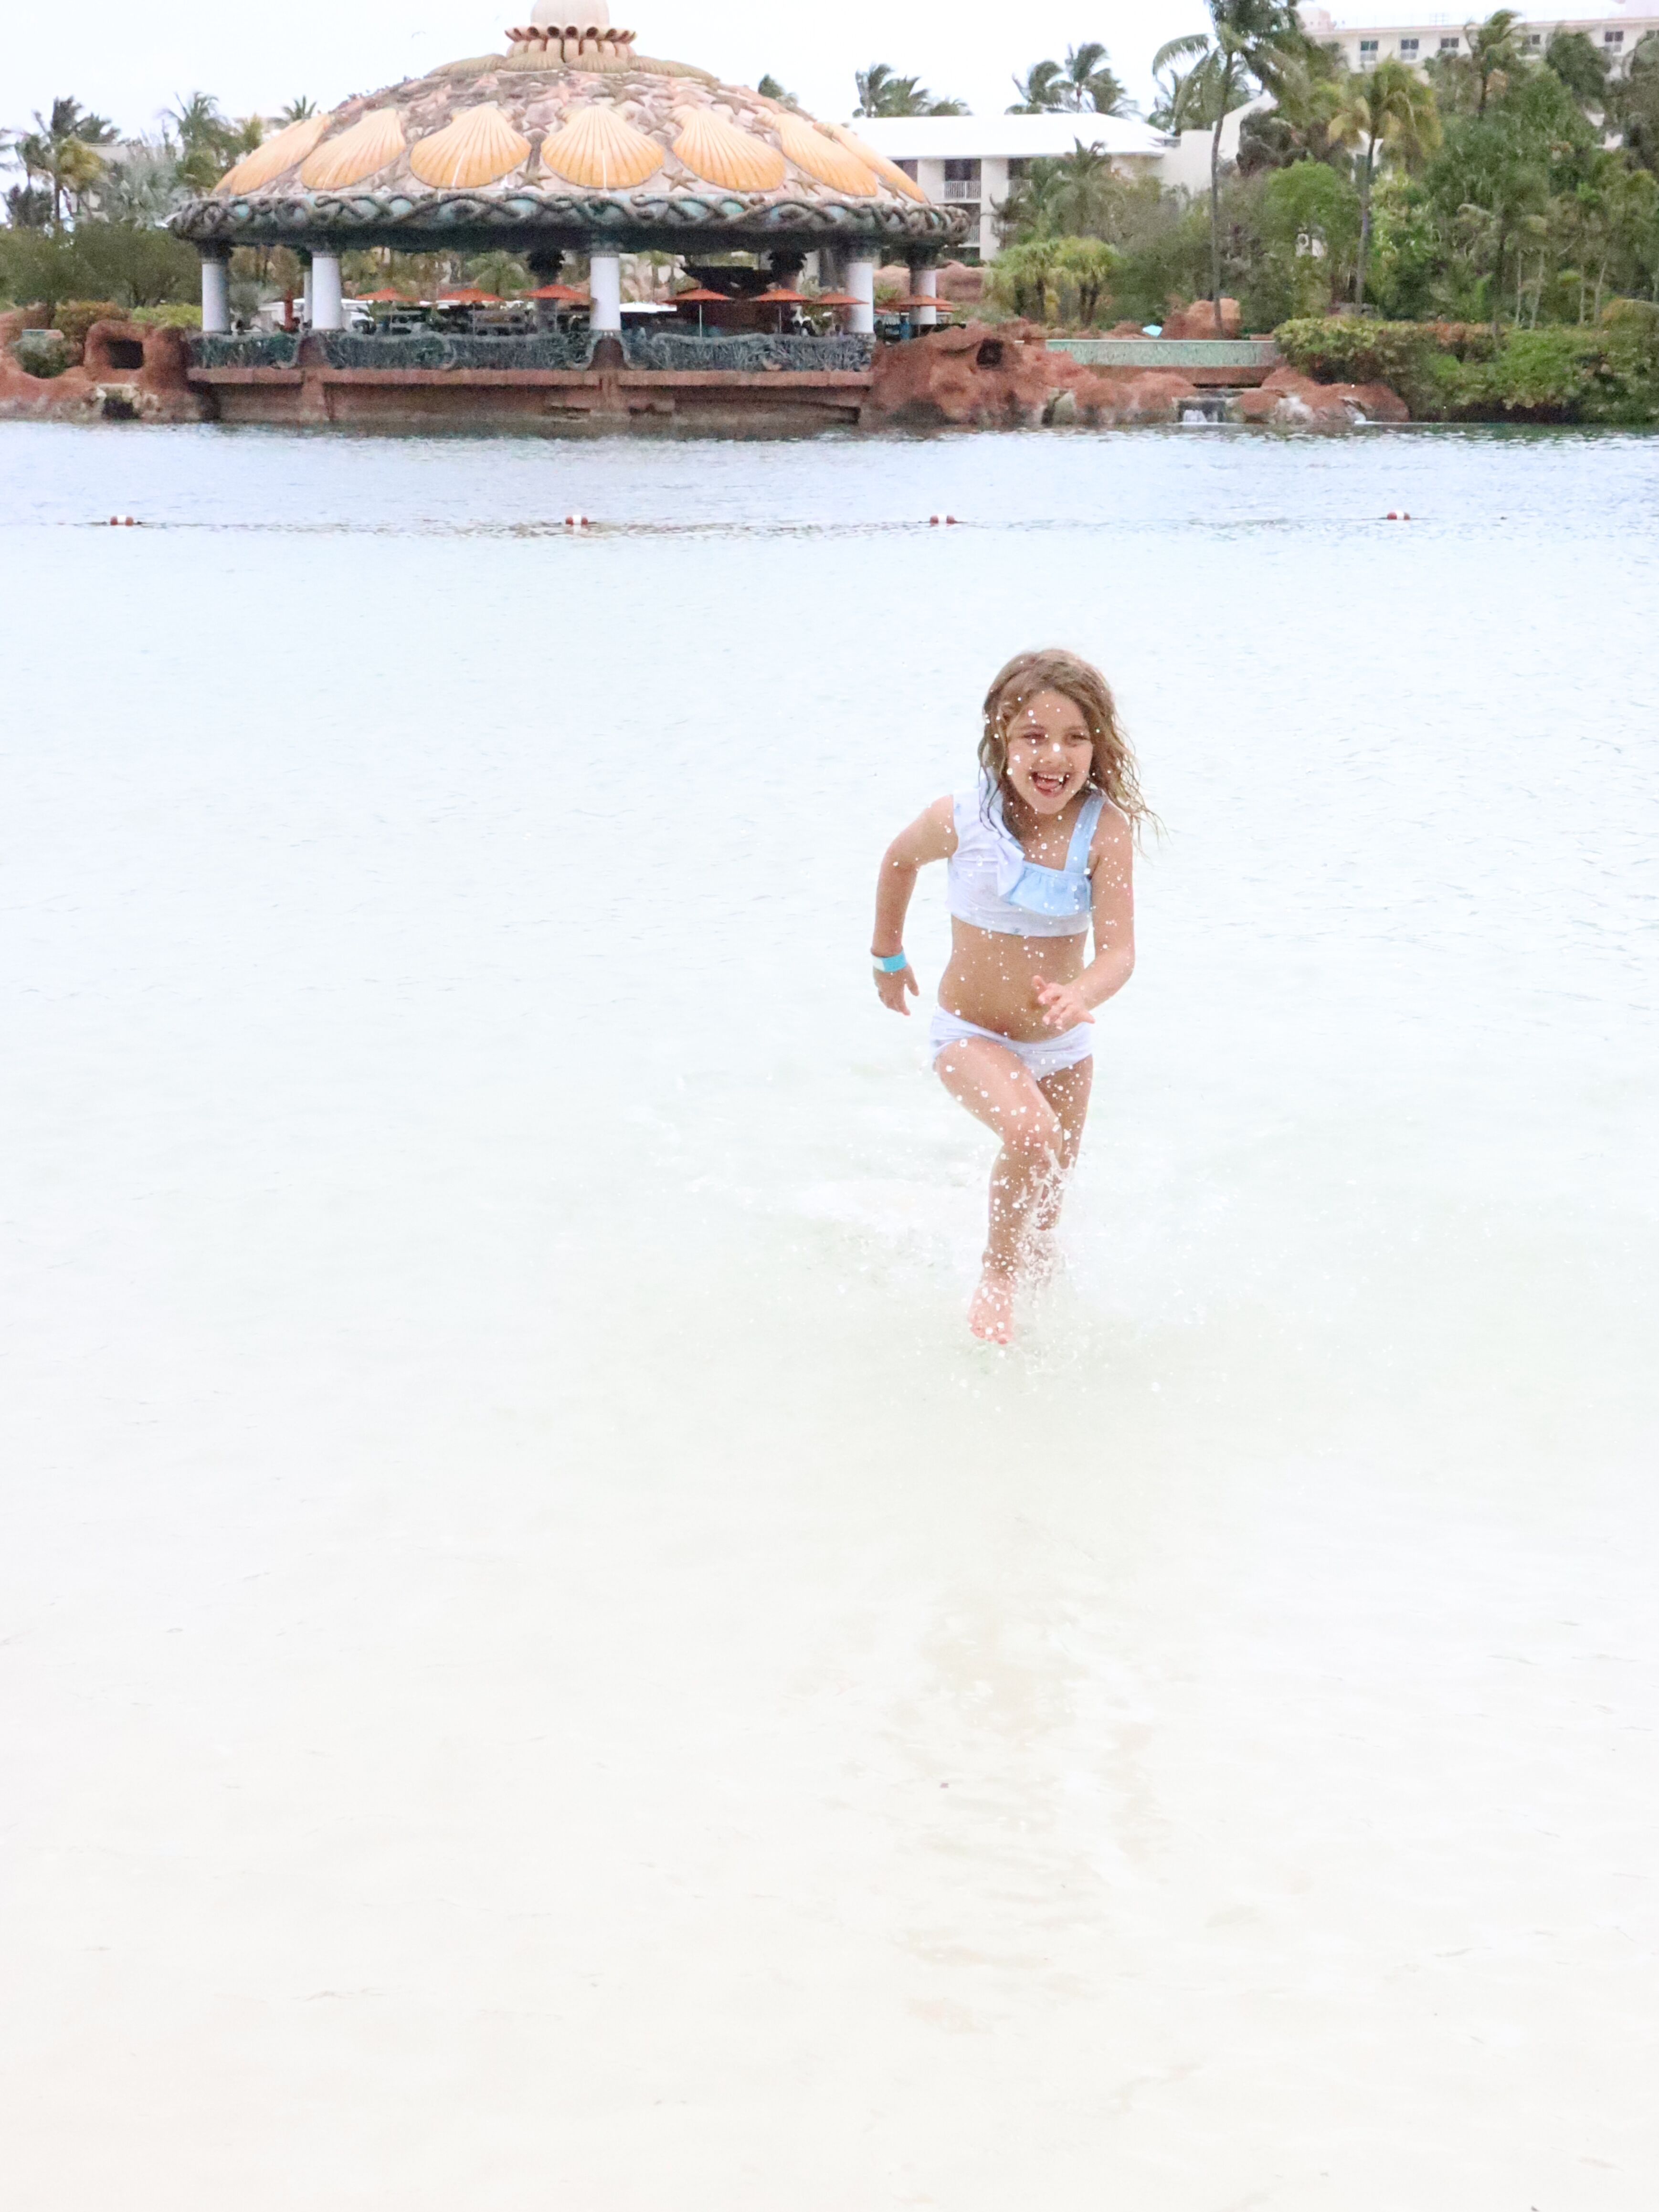 Katie running through the water at Atlantis' beach.